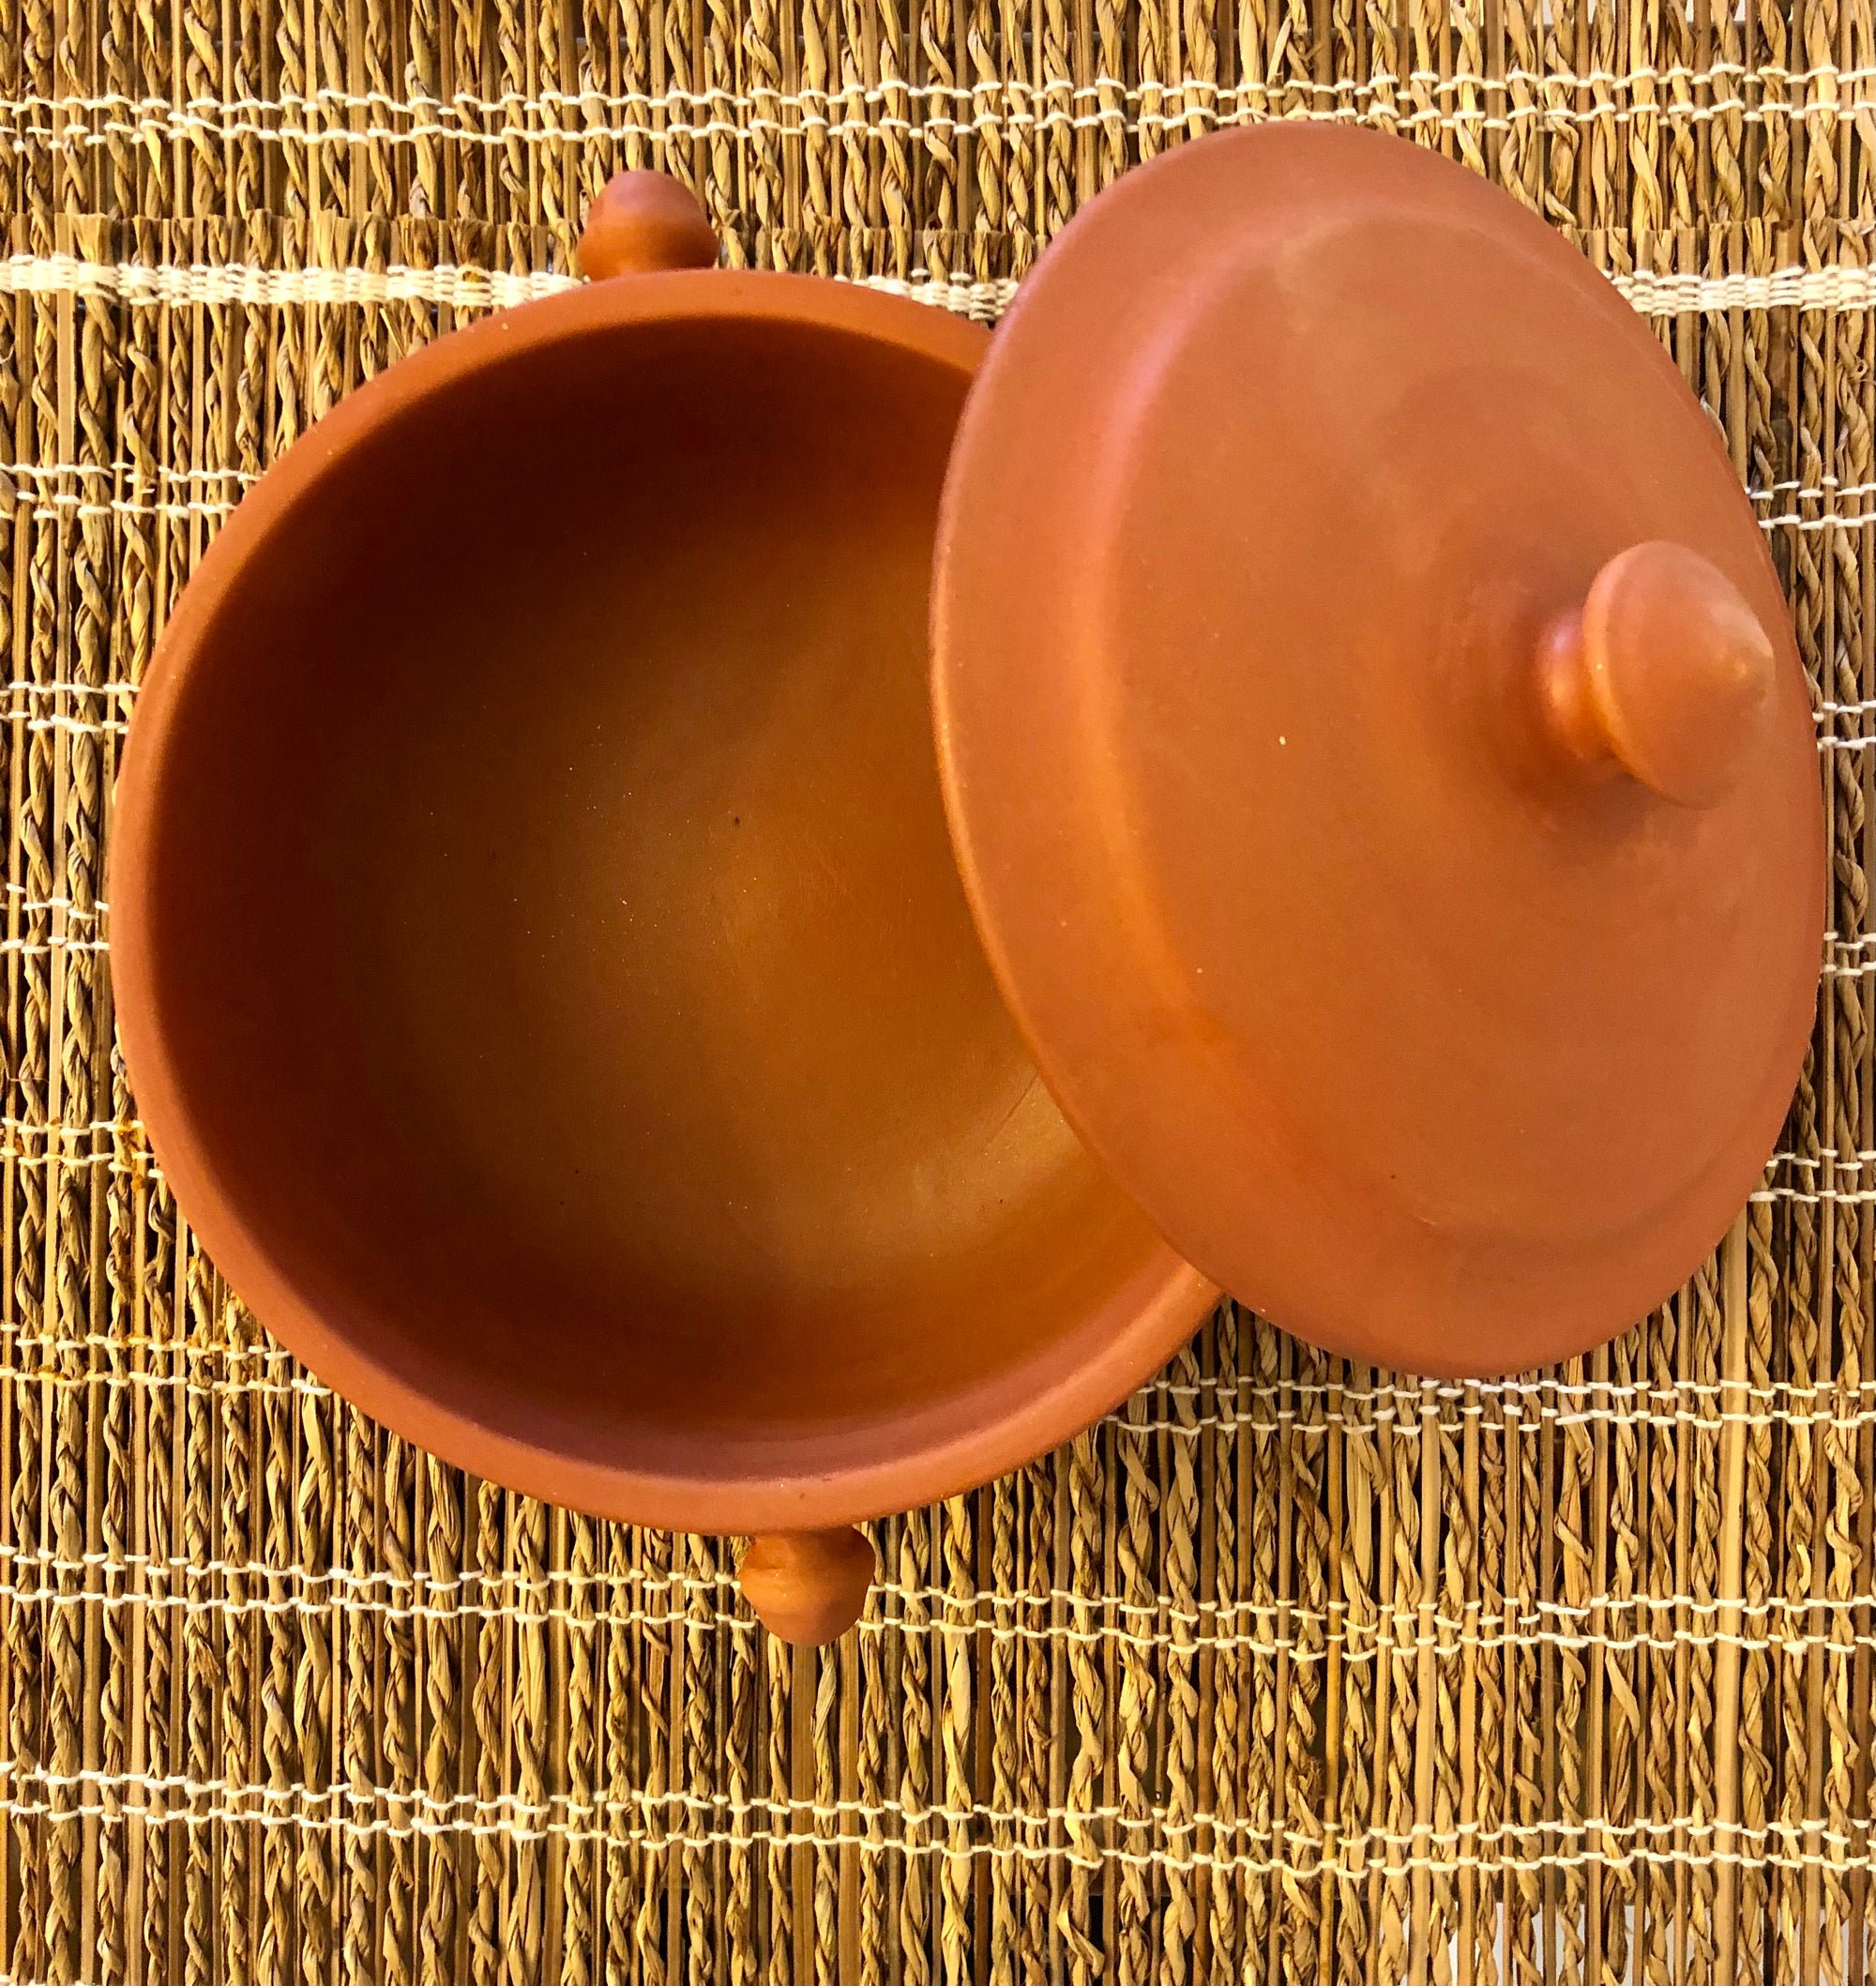 Clay Pot for Cooking Unglazed Clay Handi Water Pot Handmade Terracotta Clay  Pot